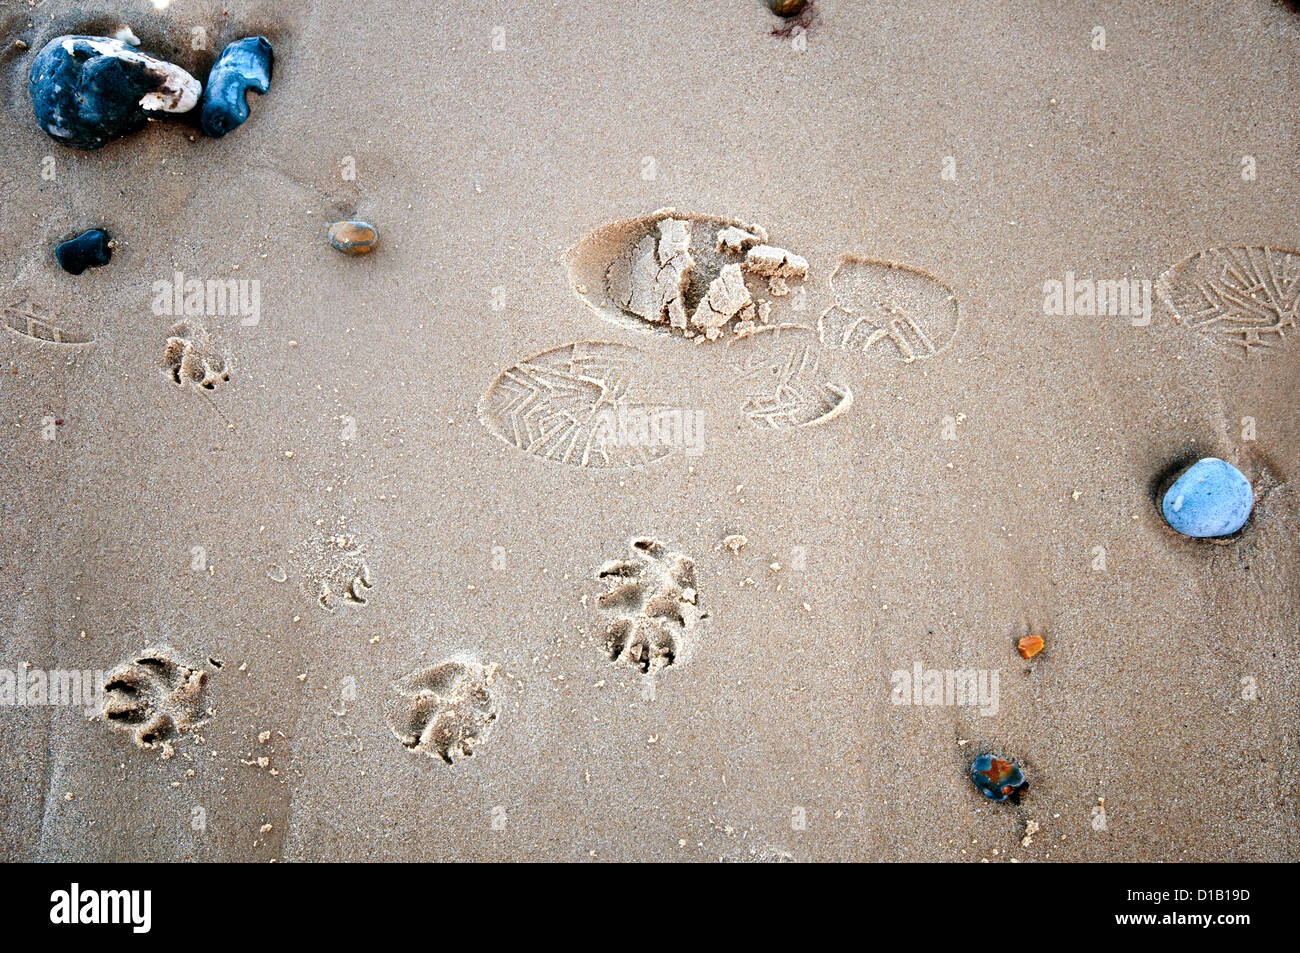 Human boot print and dog paw prints on a sandy beach with flinty rocks. Stock Photo